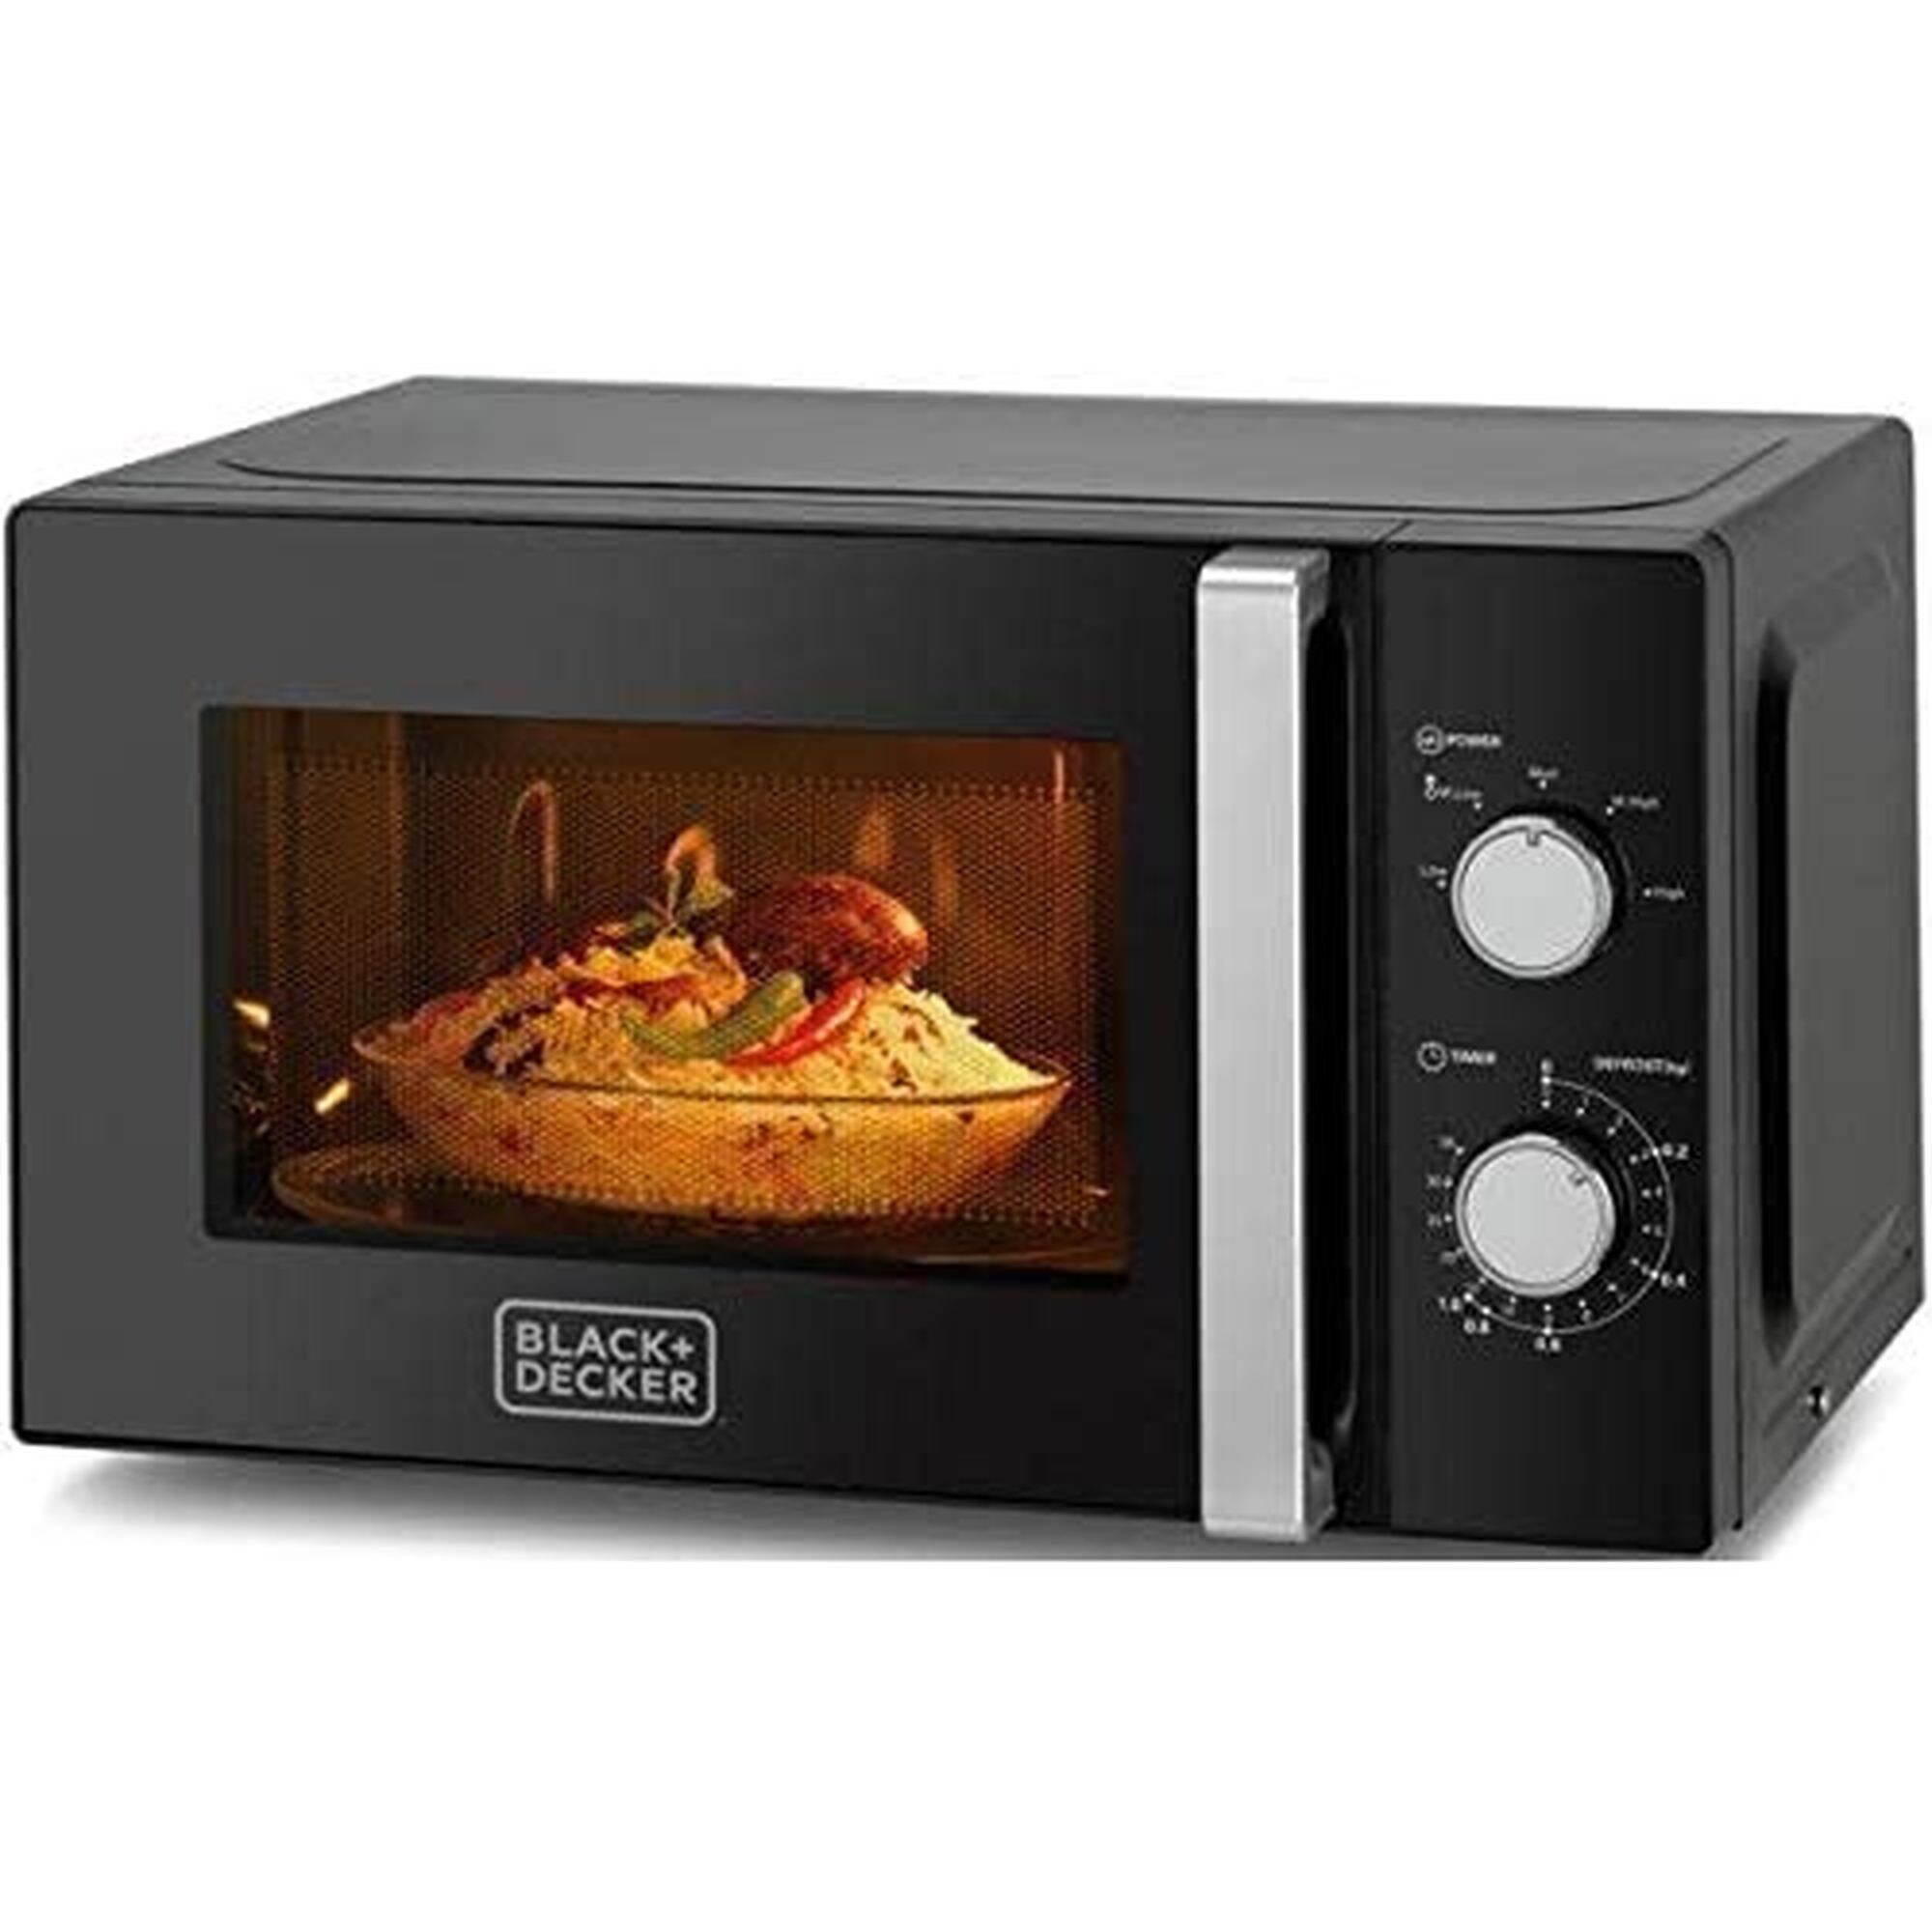 Black & Decker Metal Microwave Oven, 700W, 20L, Black